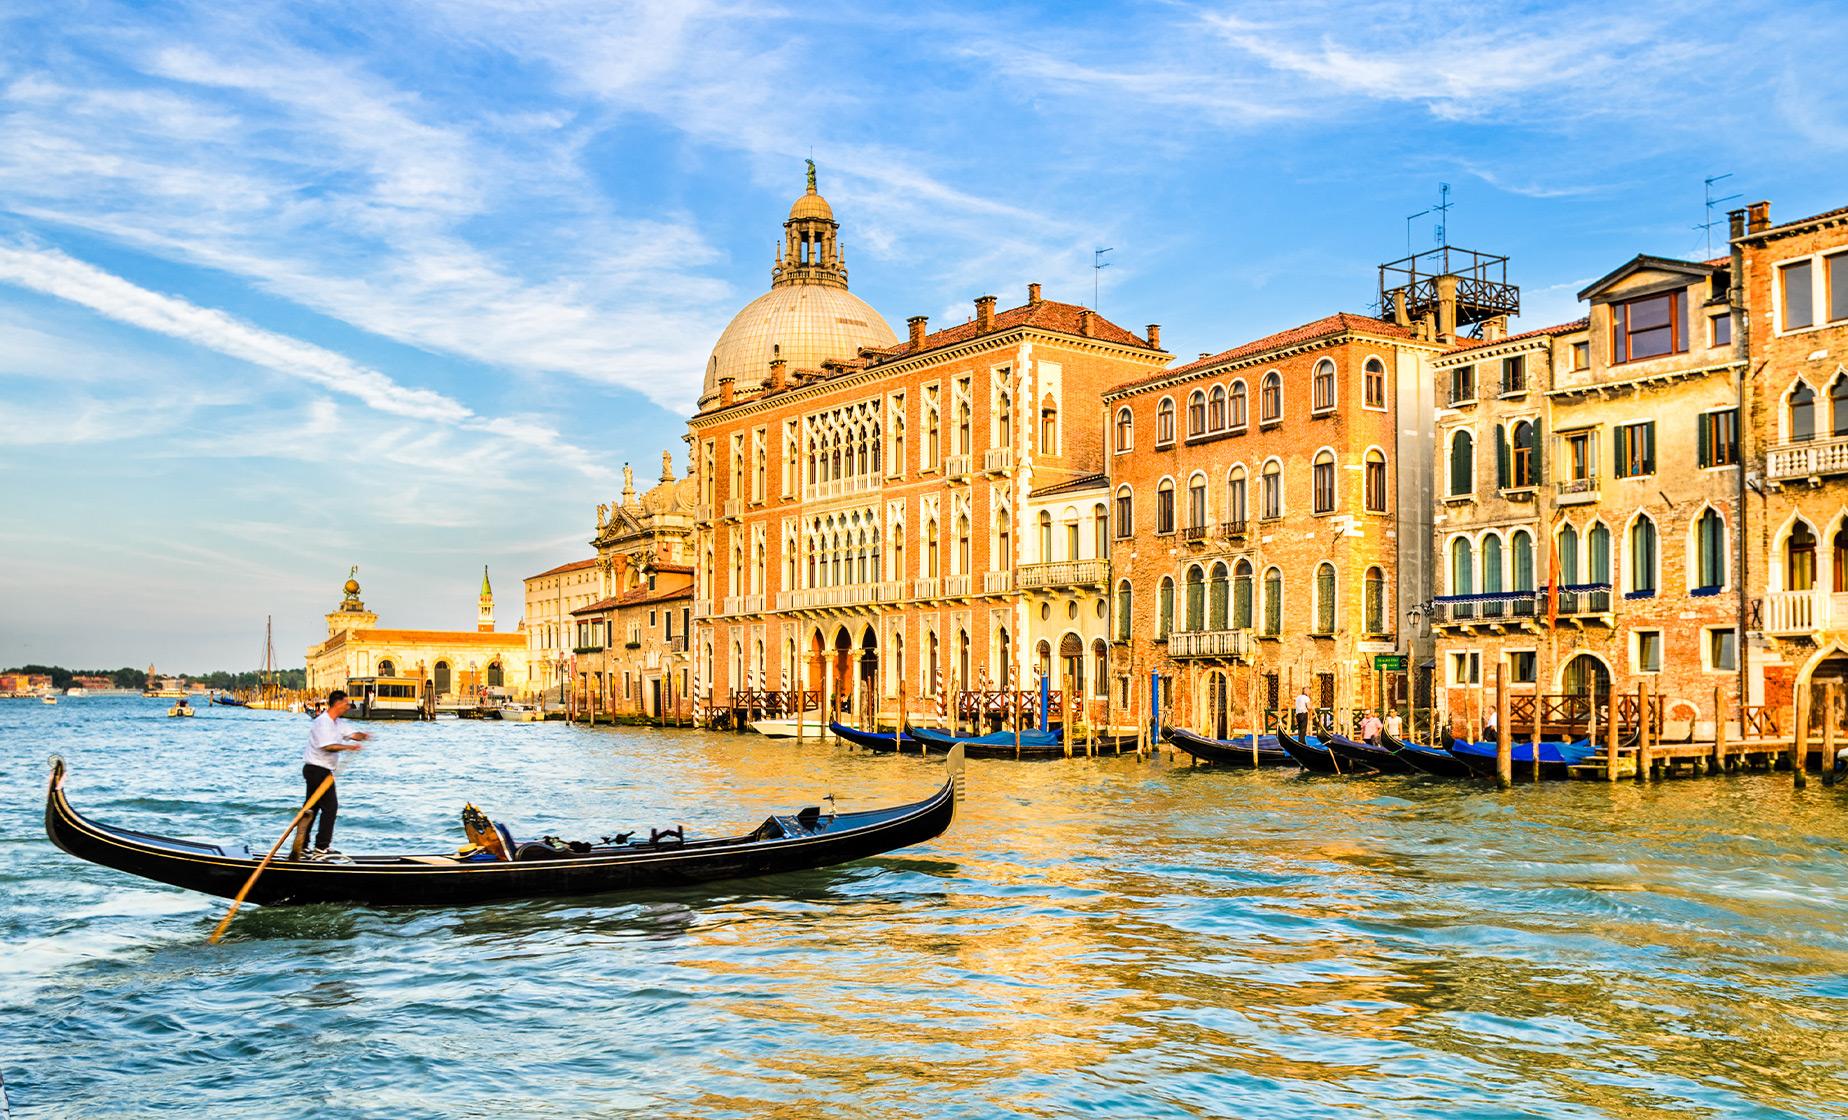 Venice Excursions | The Golden Basilica